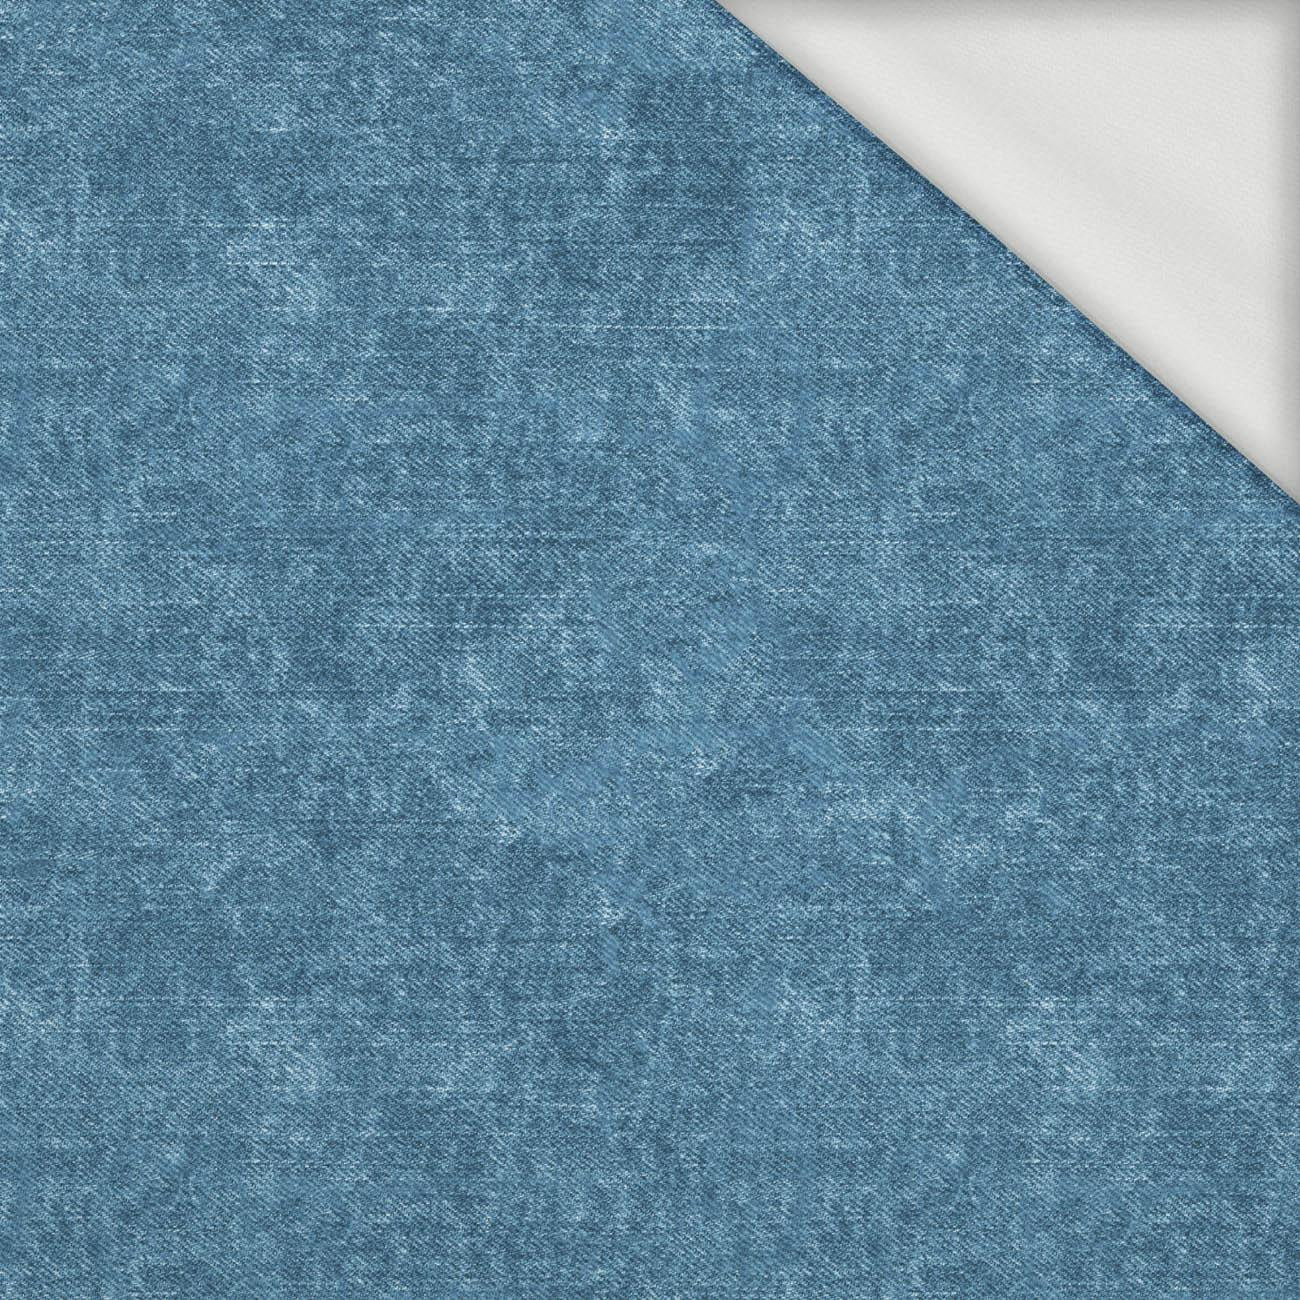 ACID WASH / ATLANTIC BLUE - looped knit fabric